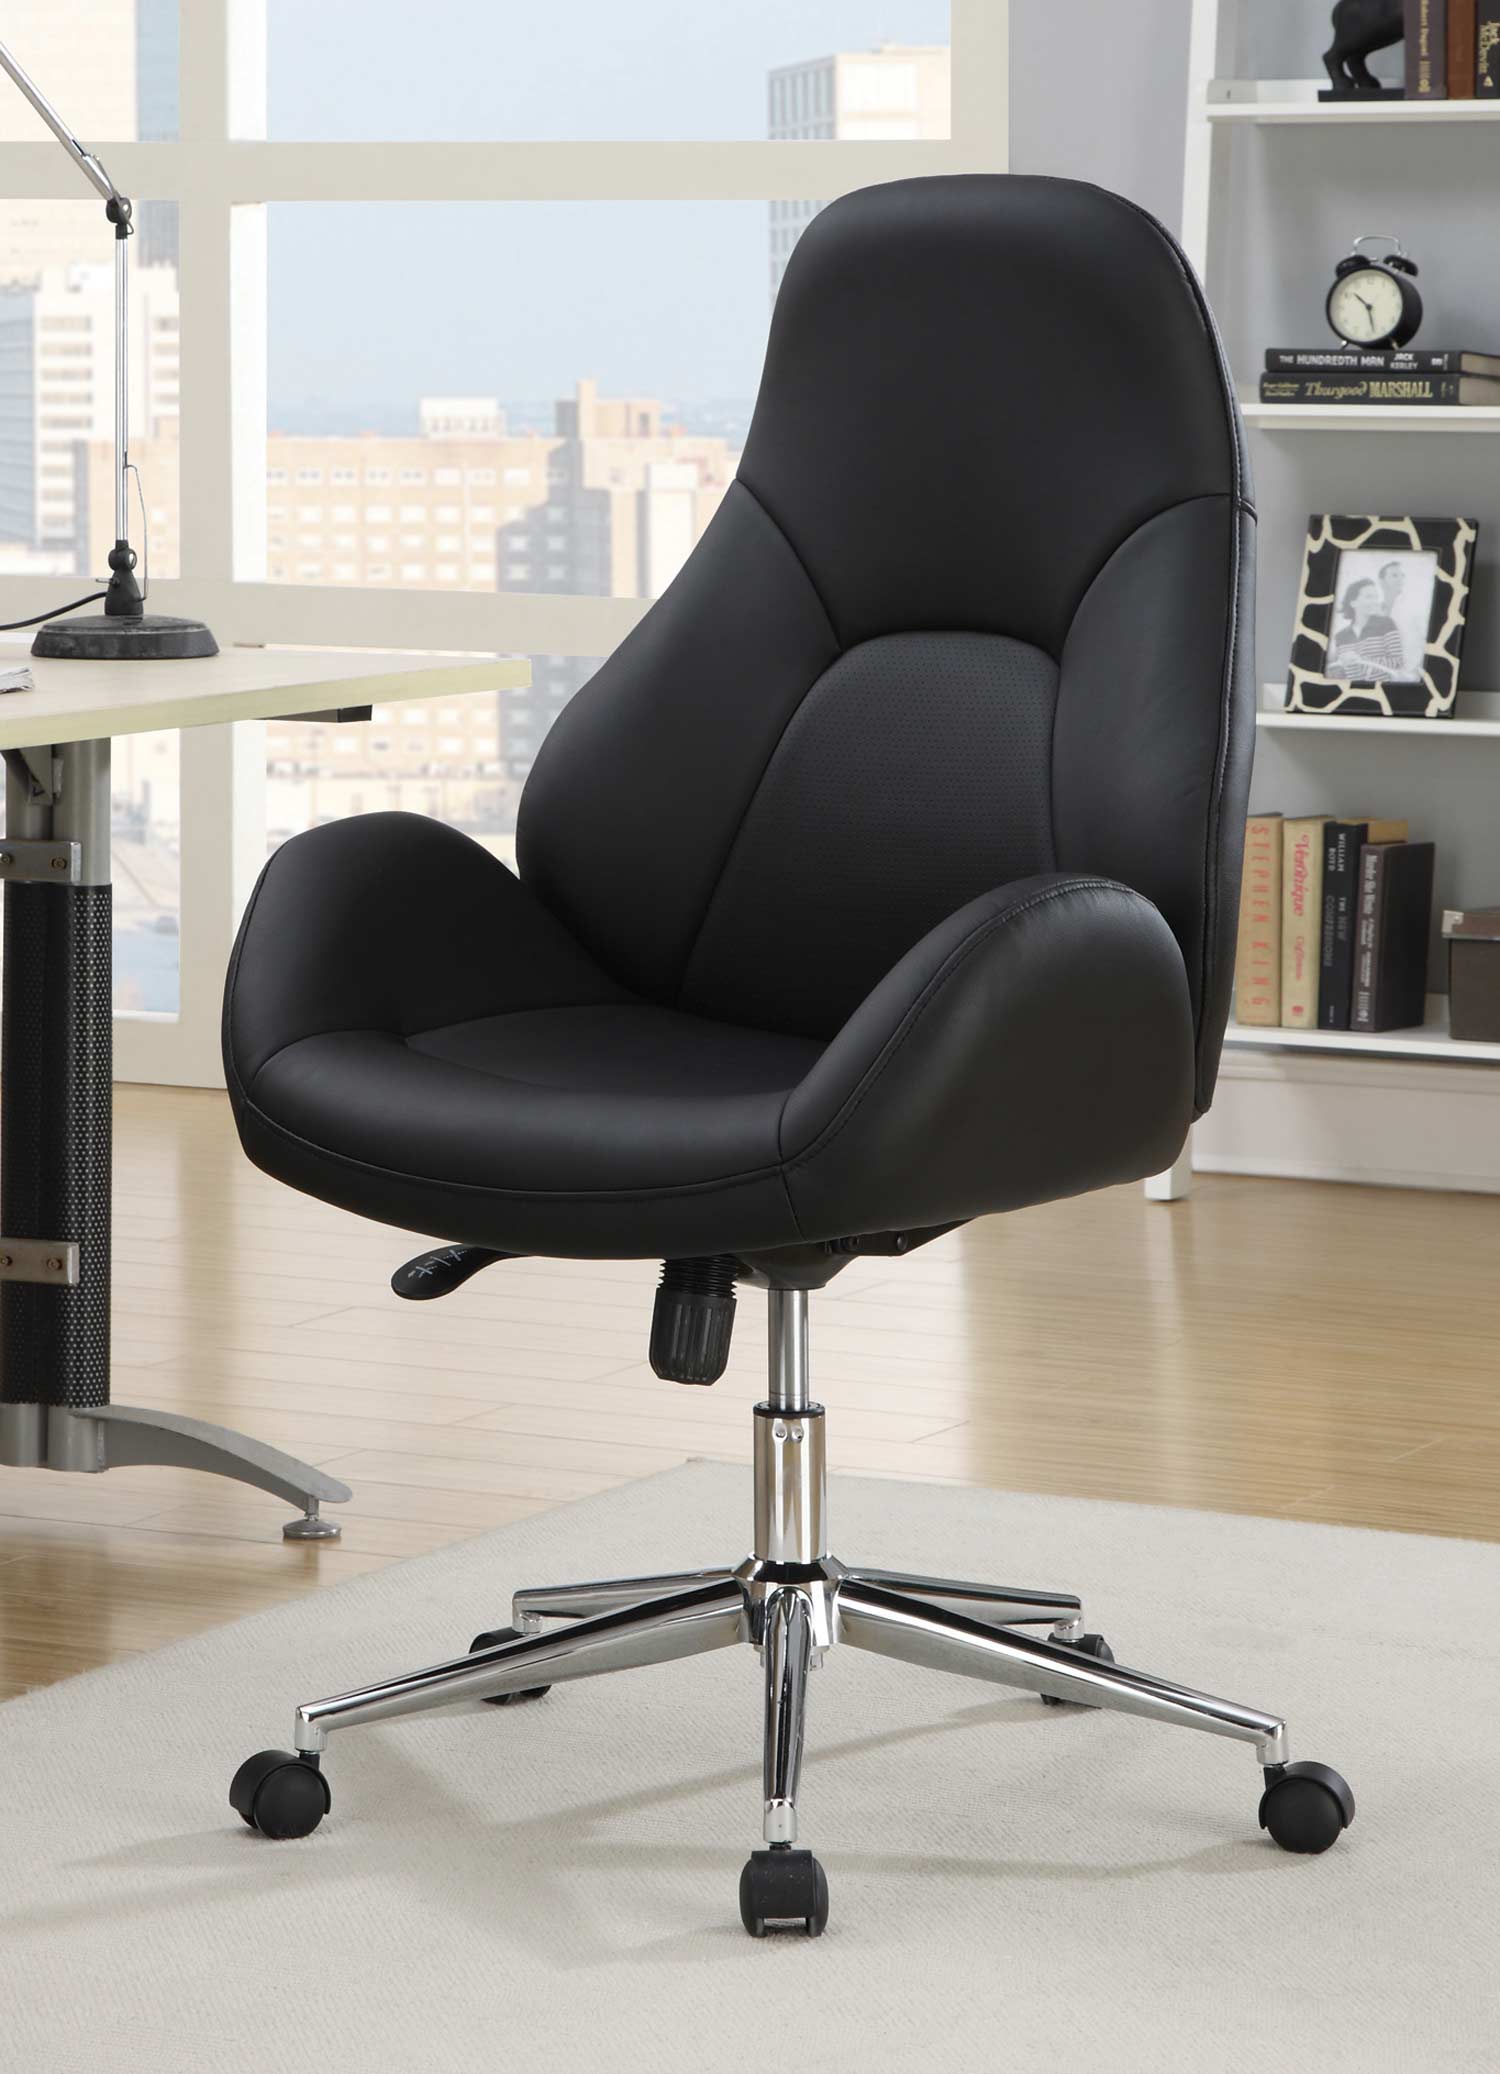 Coaster 800548 Office Chair - Black